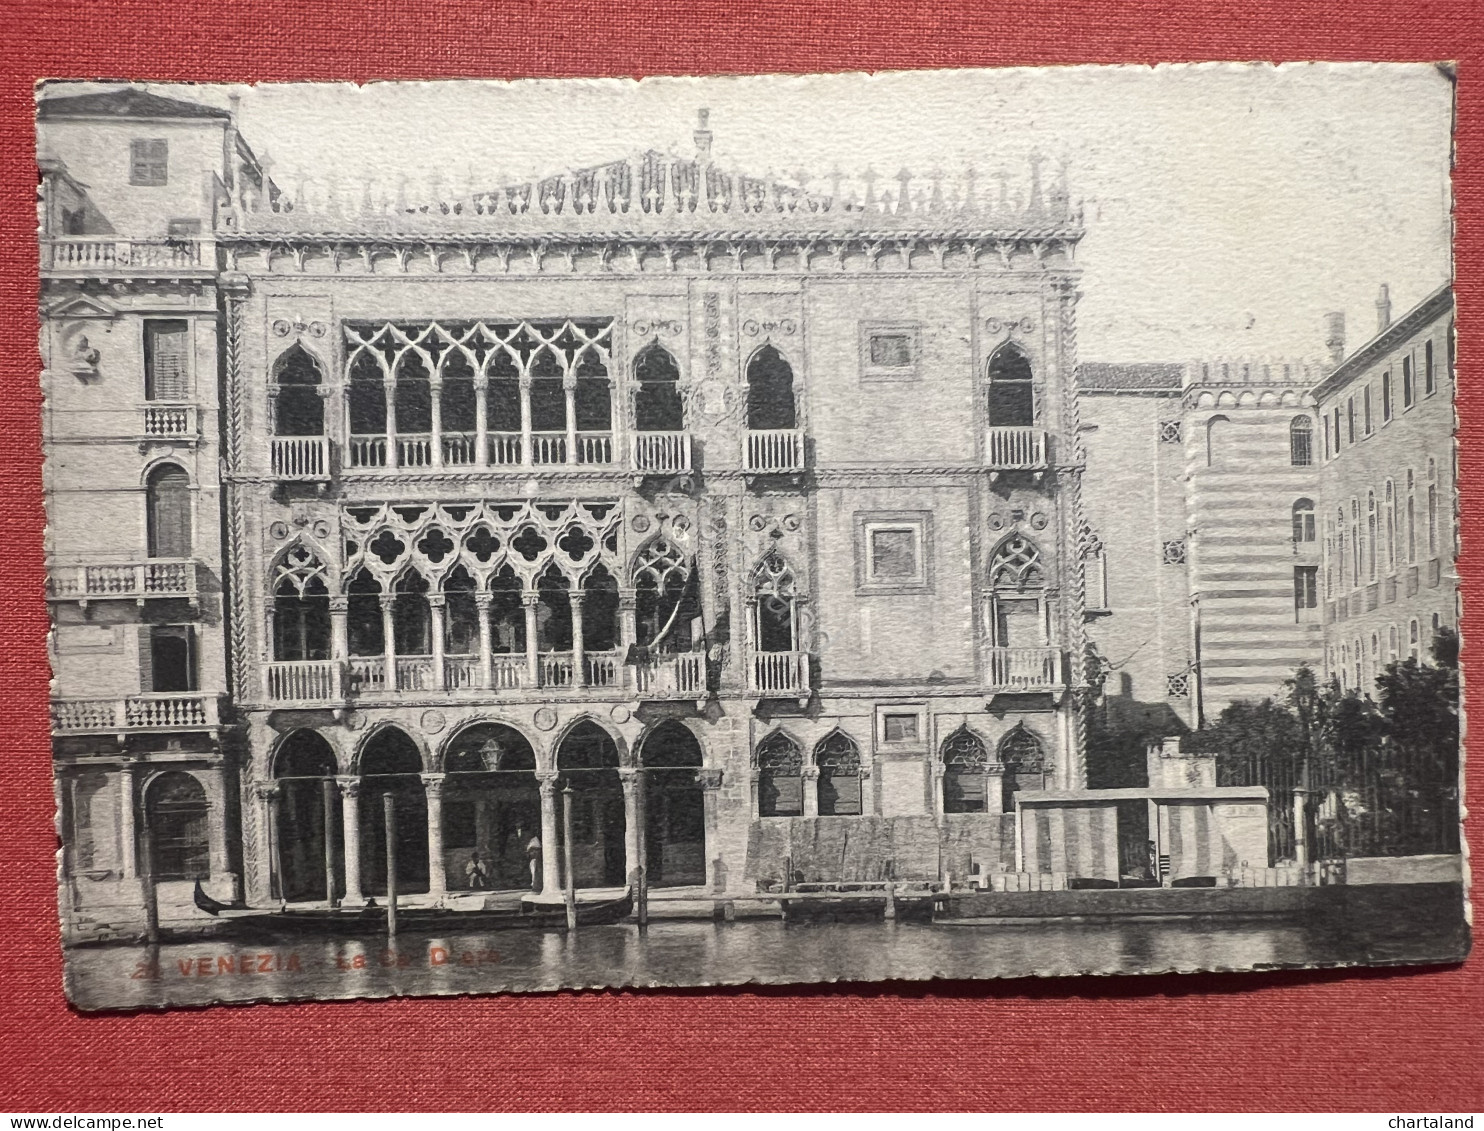 Cartolina - Venezia - La Cà D'Oro - 1906 - Venezia (Venice)